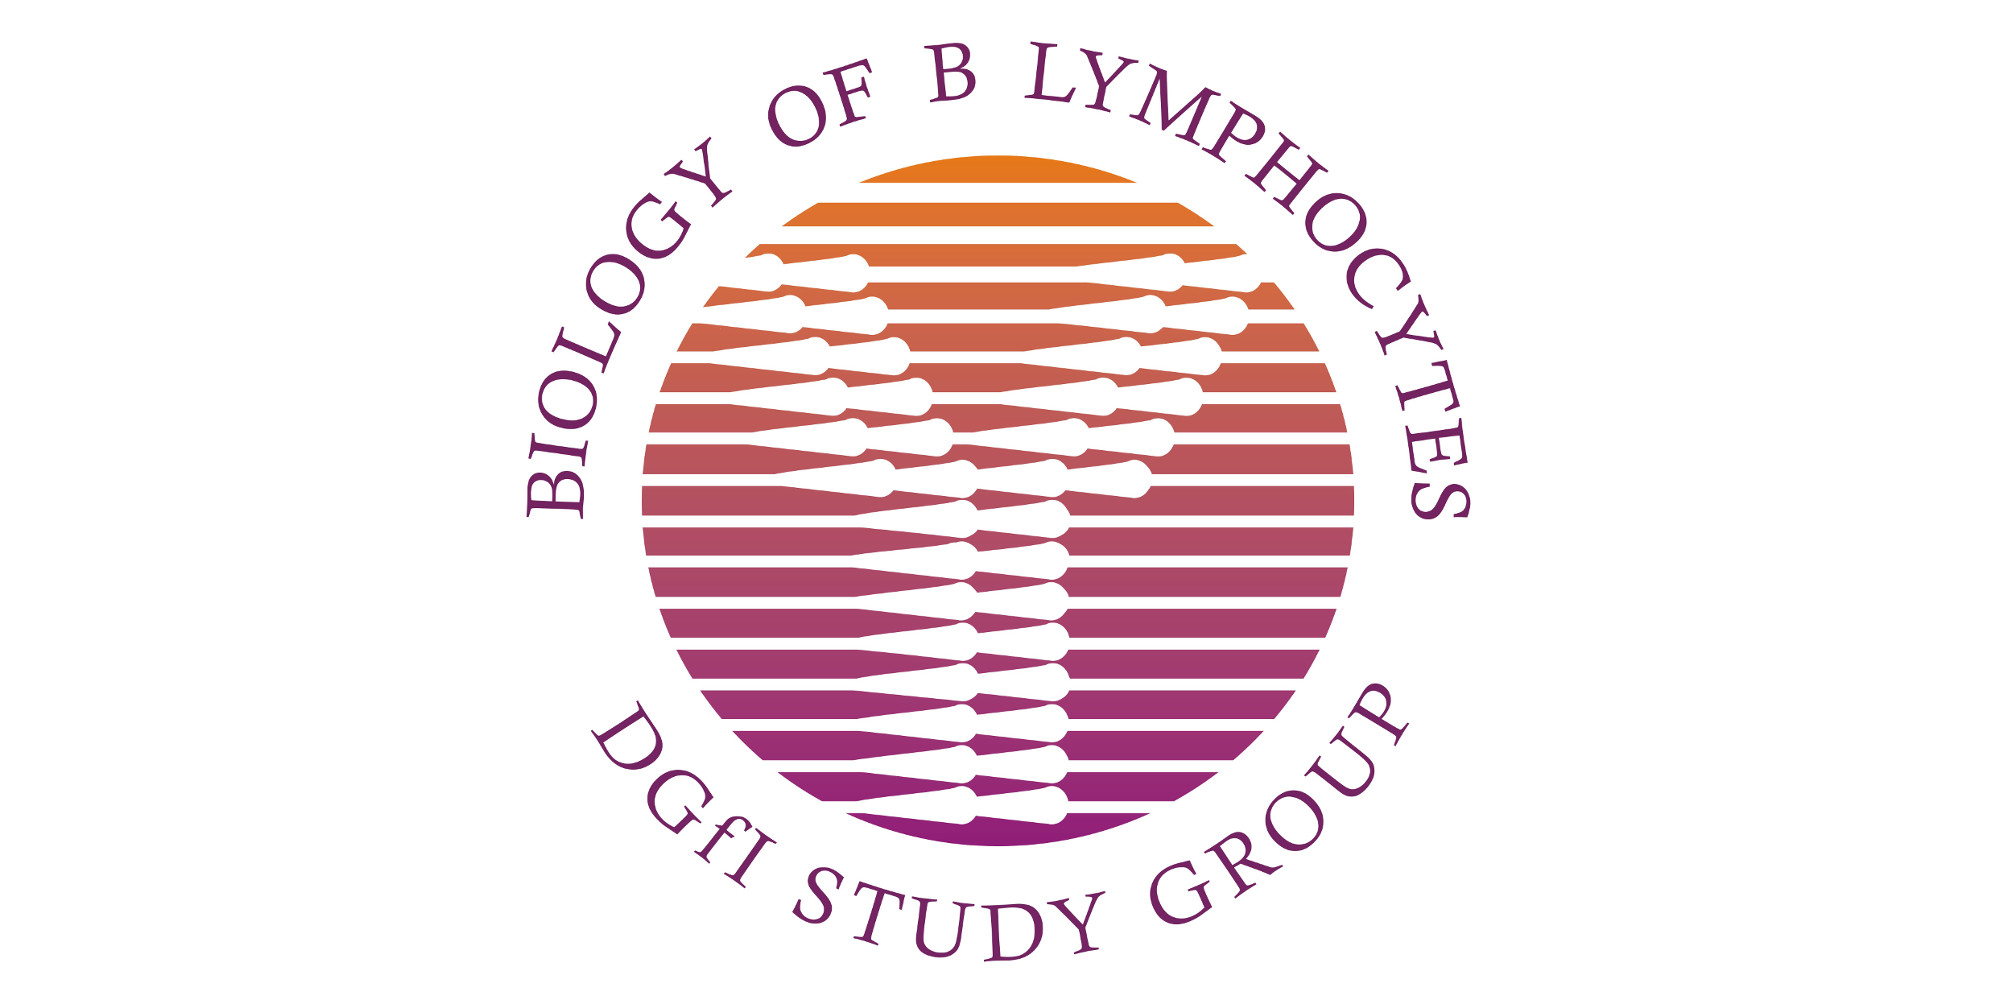 Towards page "Biology of B Lymphocytes"